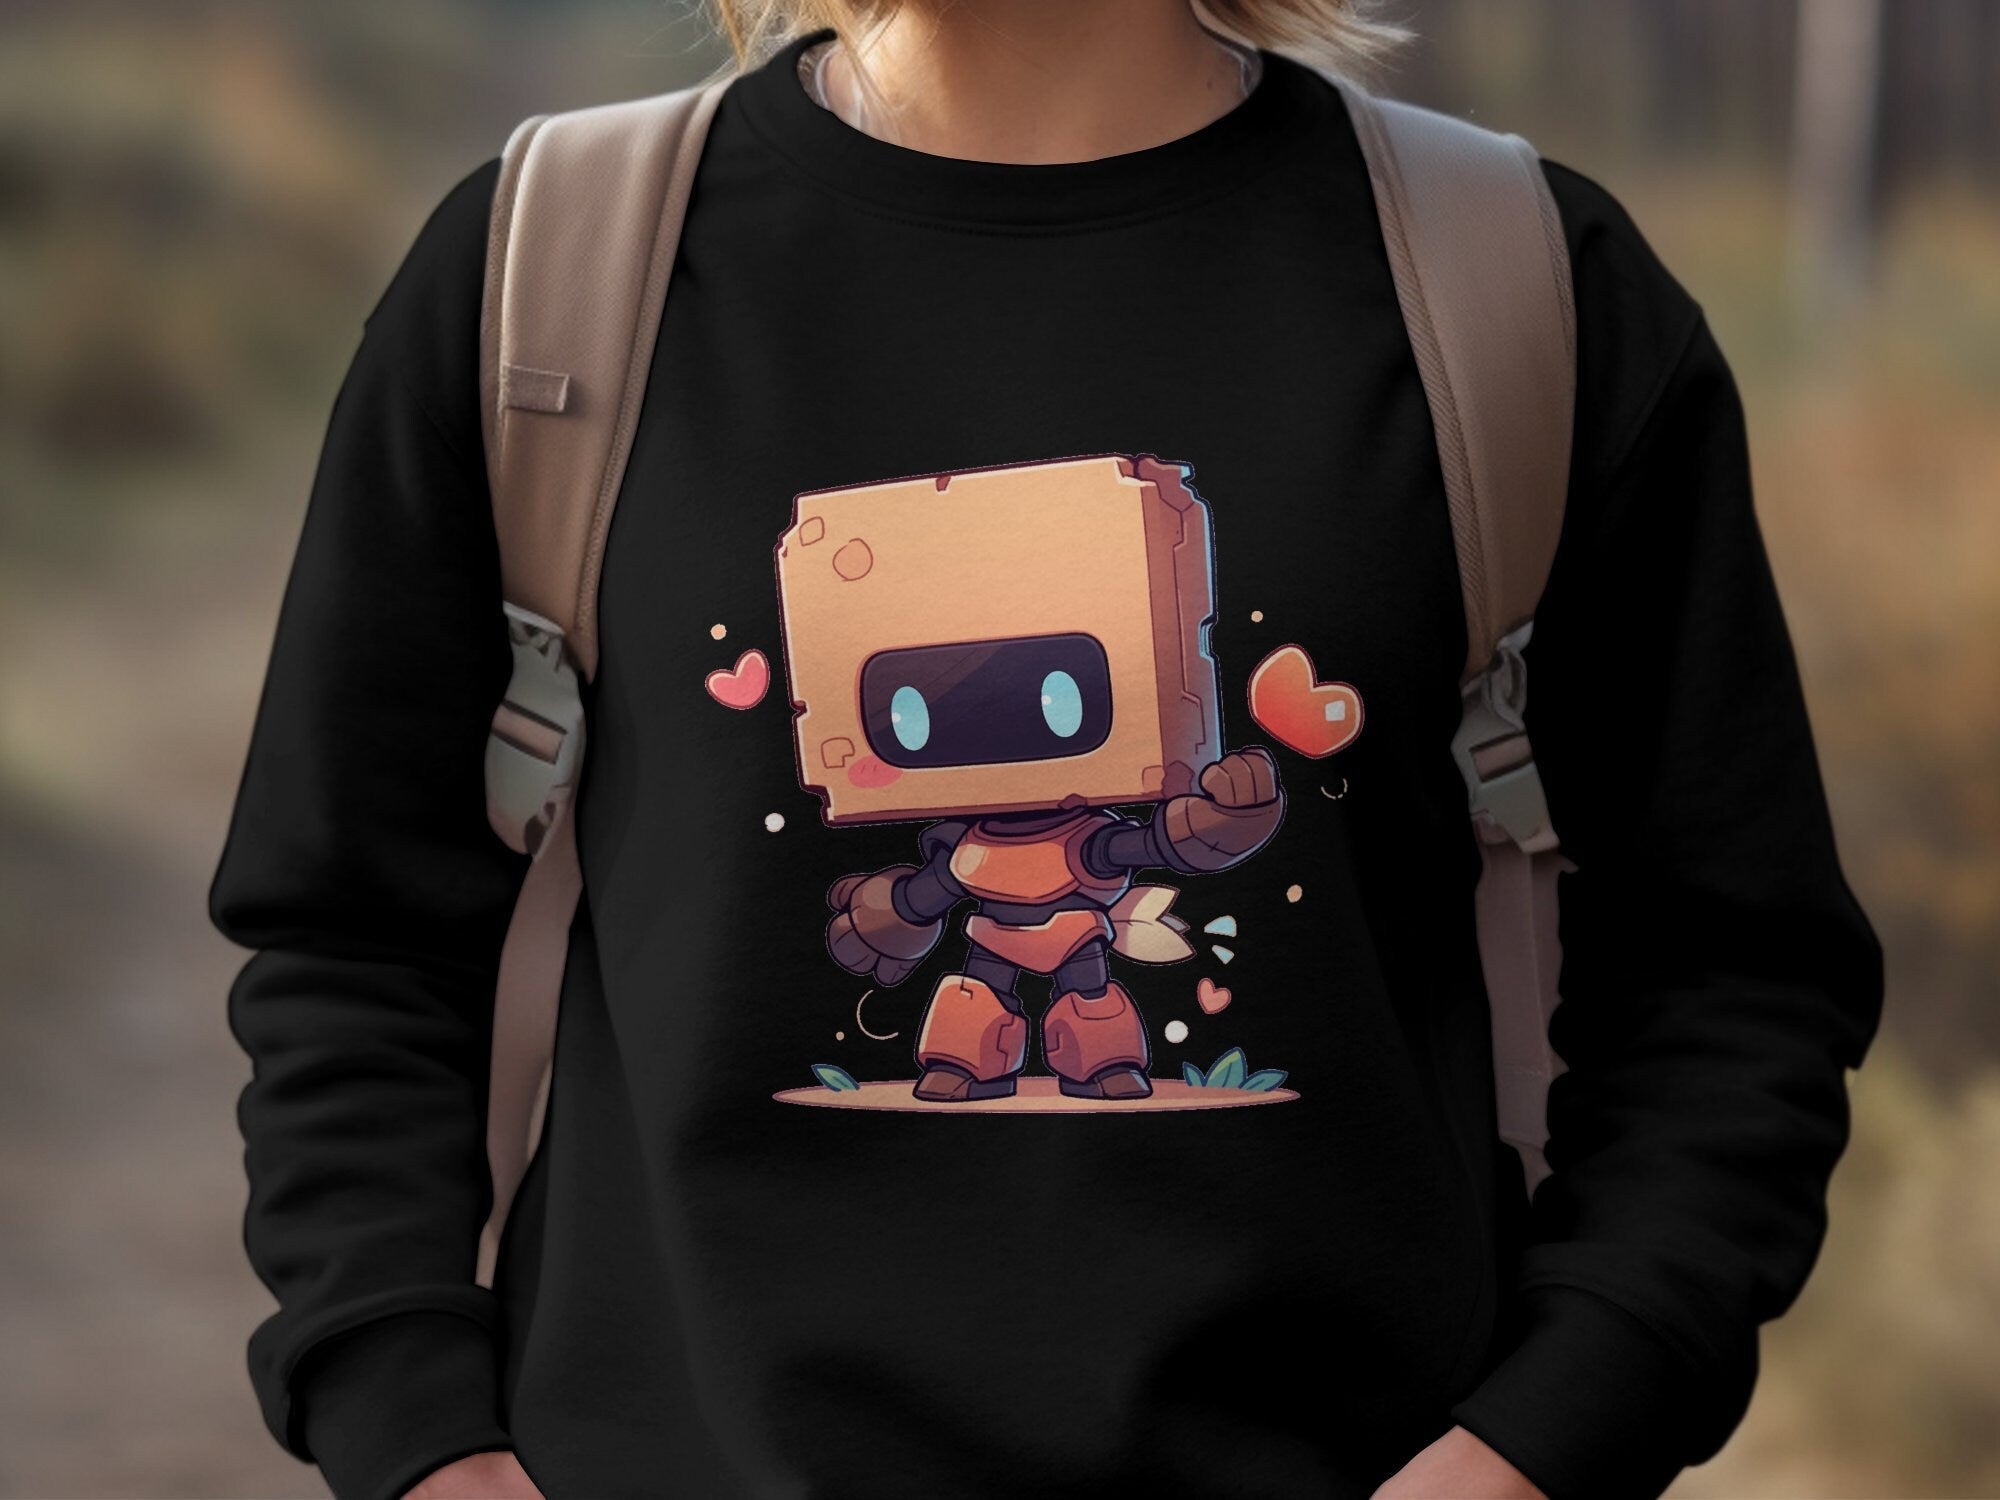 Cute Robot Character Sweatshirt - MiTo Store